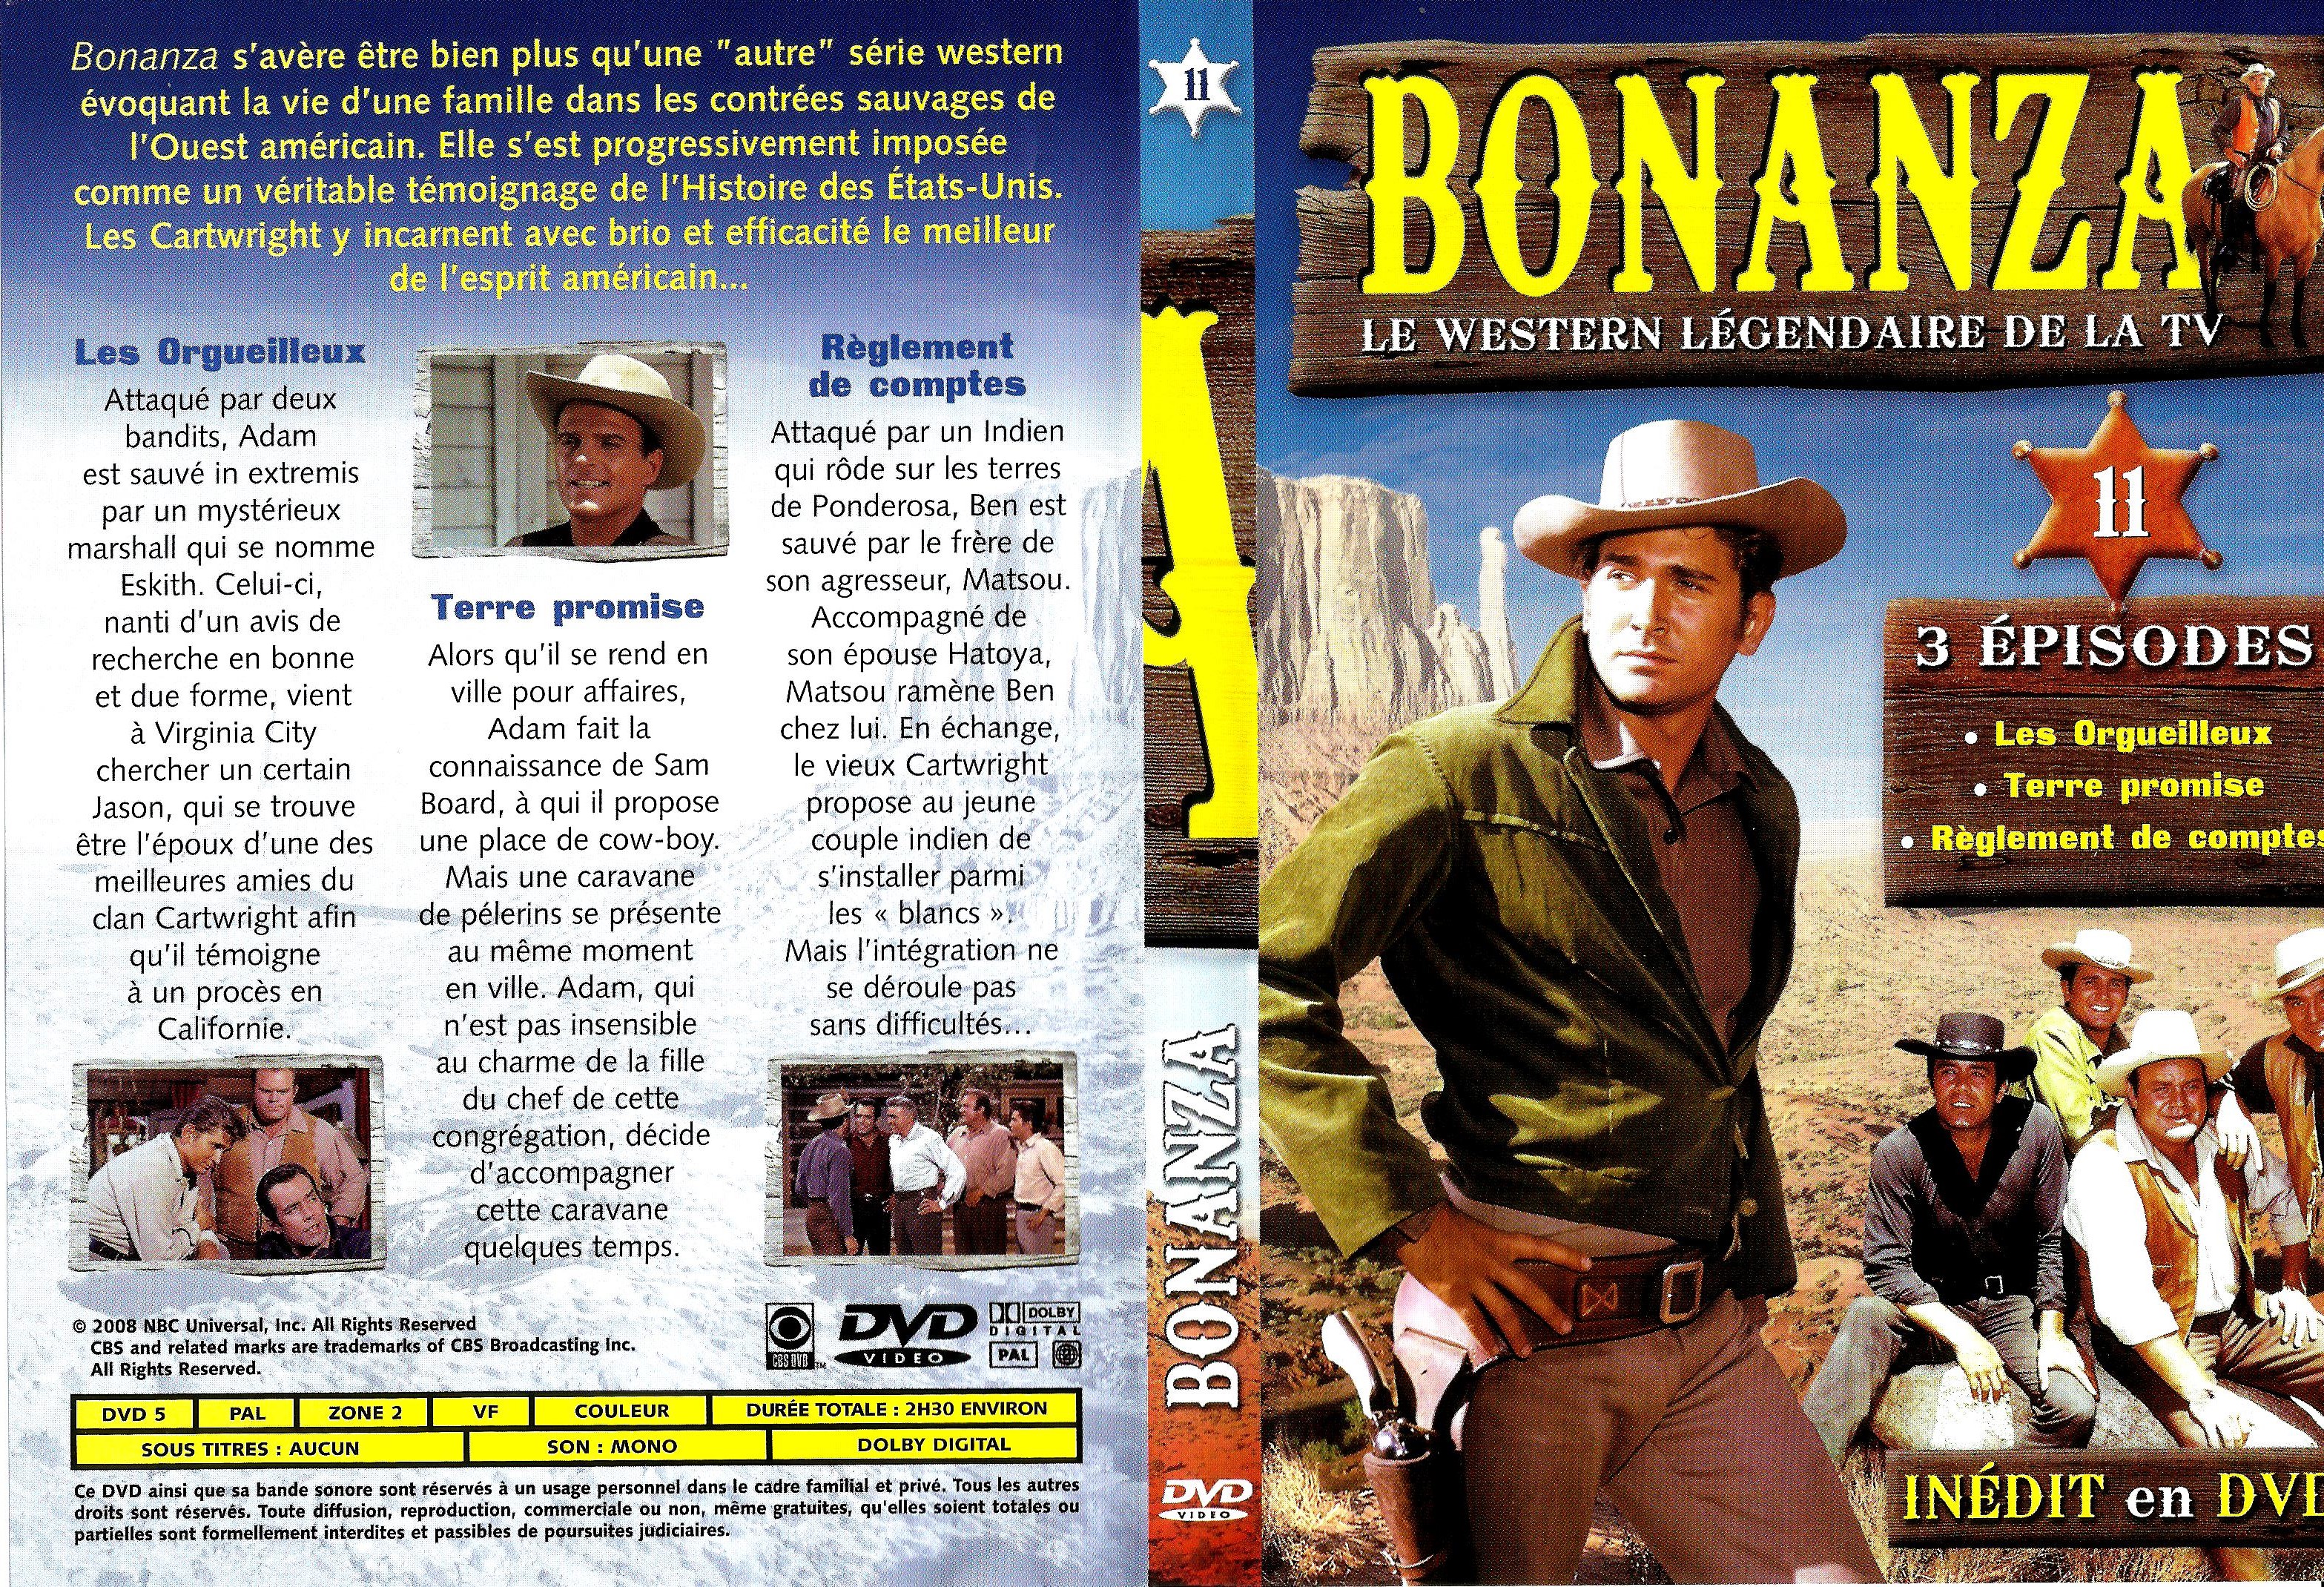 Jaquette DVD Bonanza vol 11